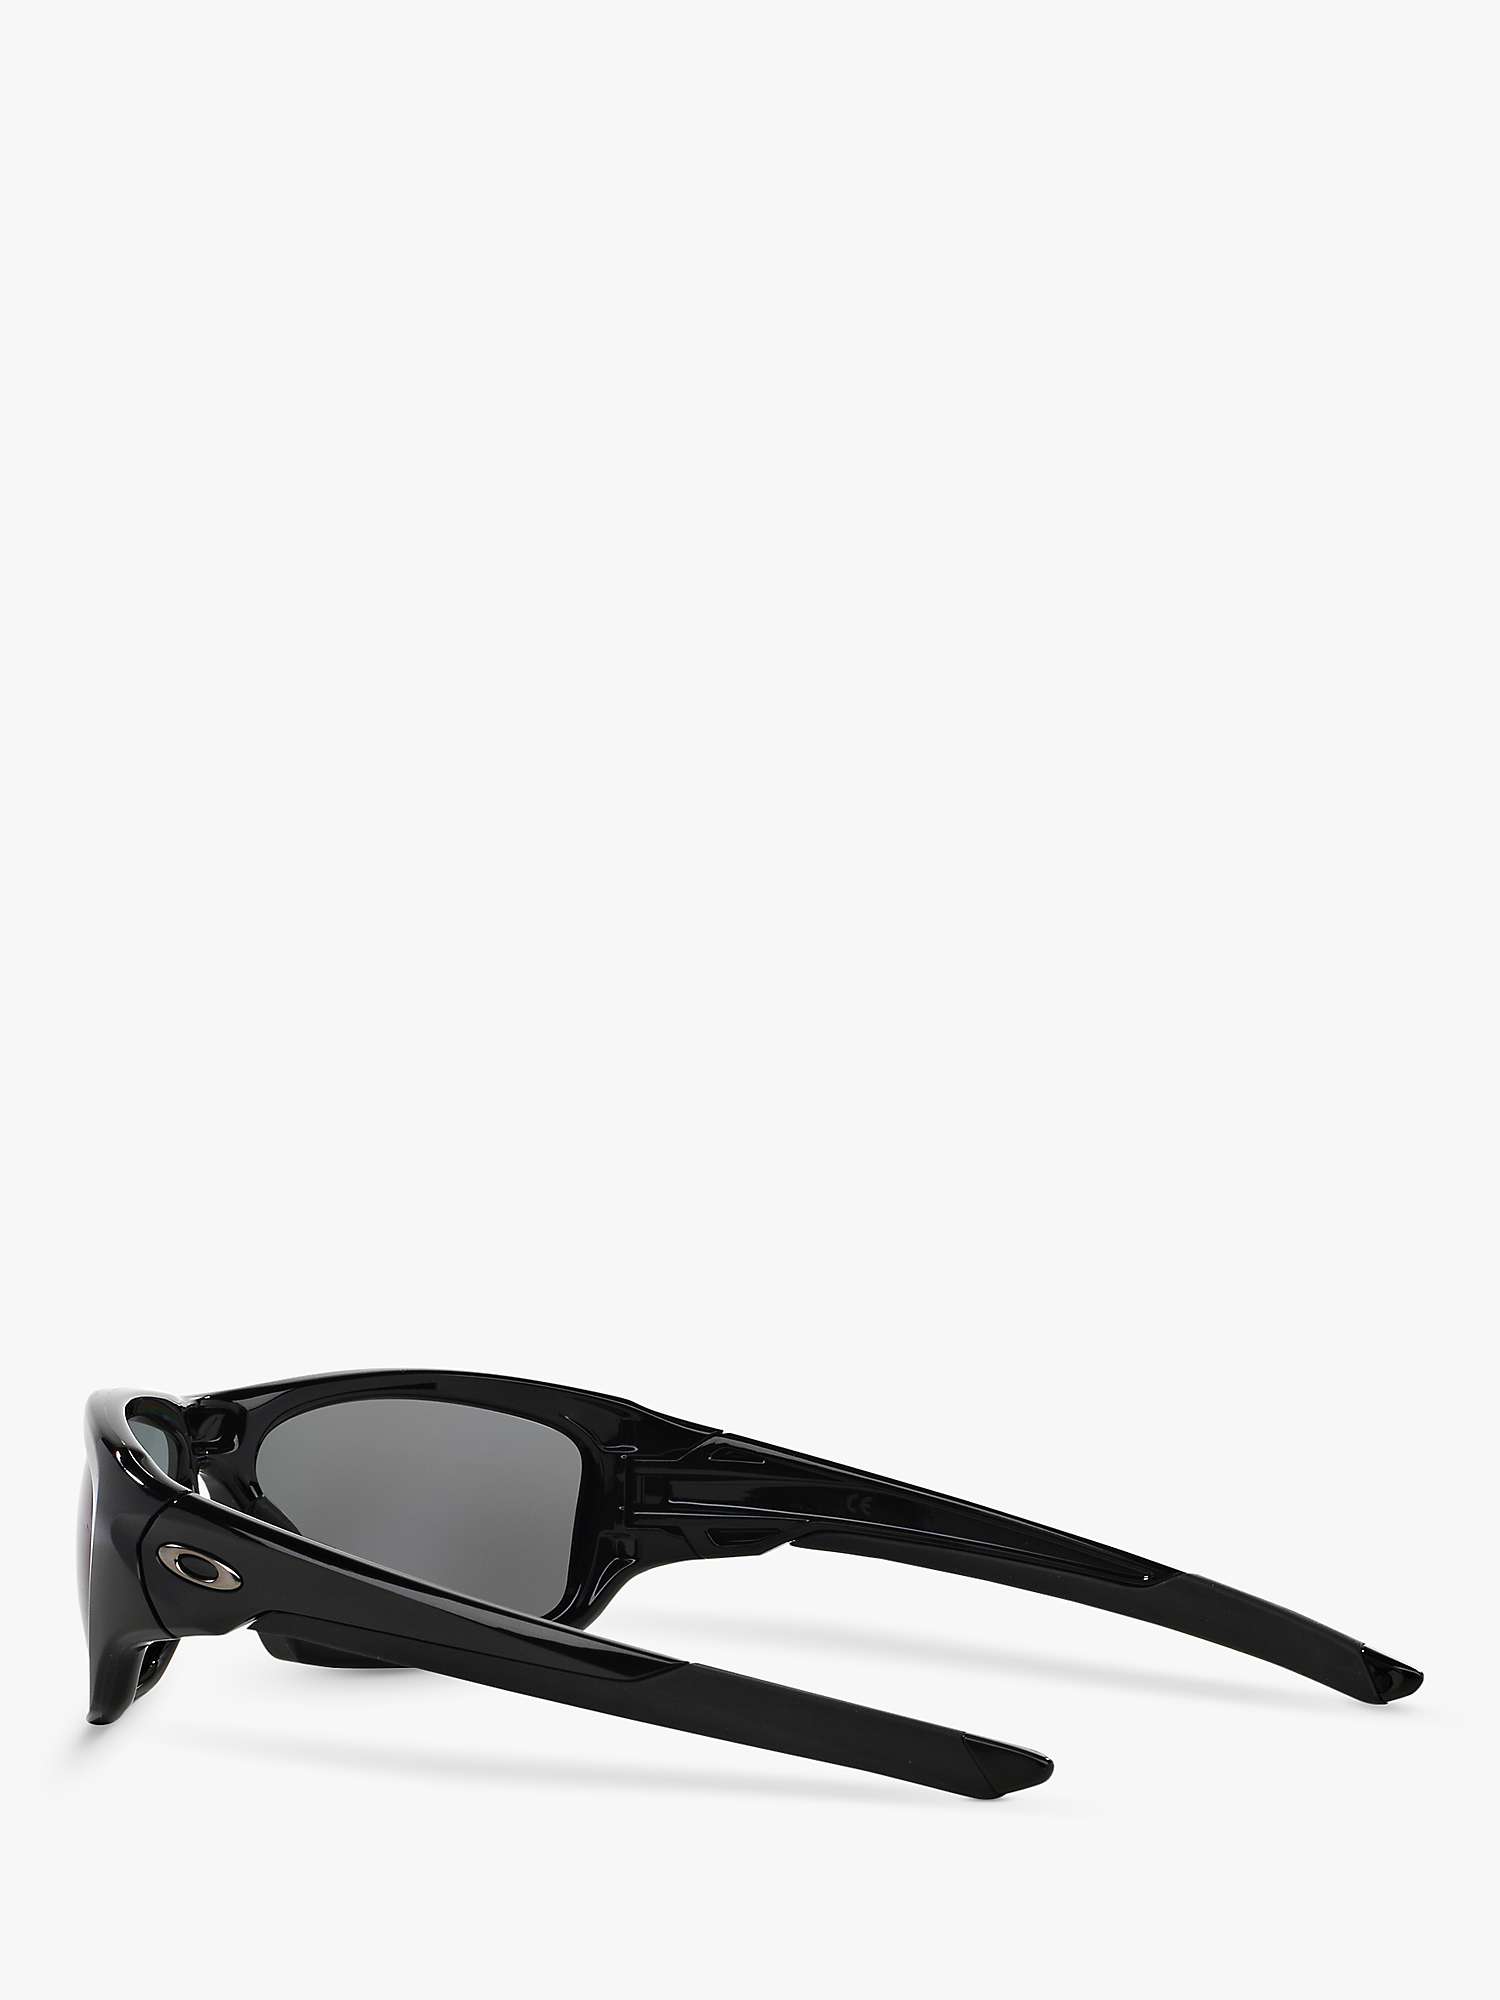 Buy Oakley OO9236 Men's Valve Polarised Rectangular Sunglasses Online at johnlewis.com